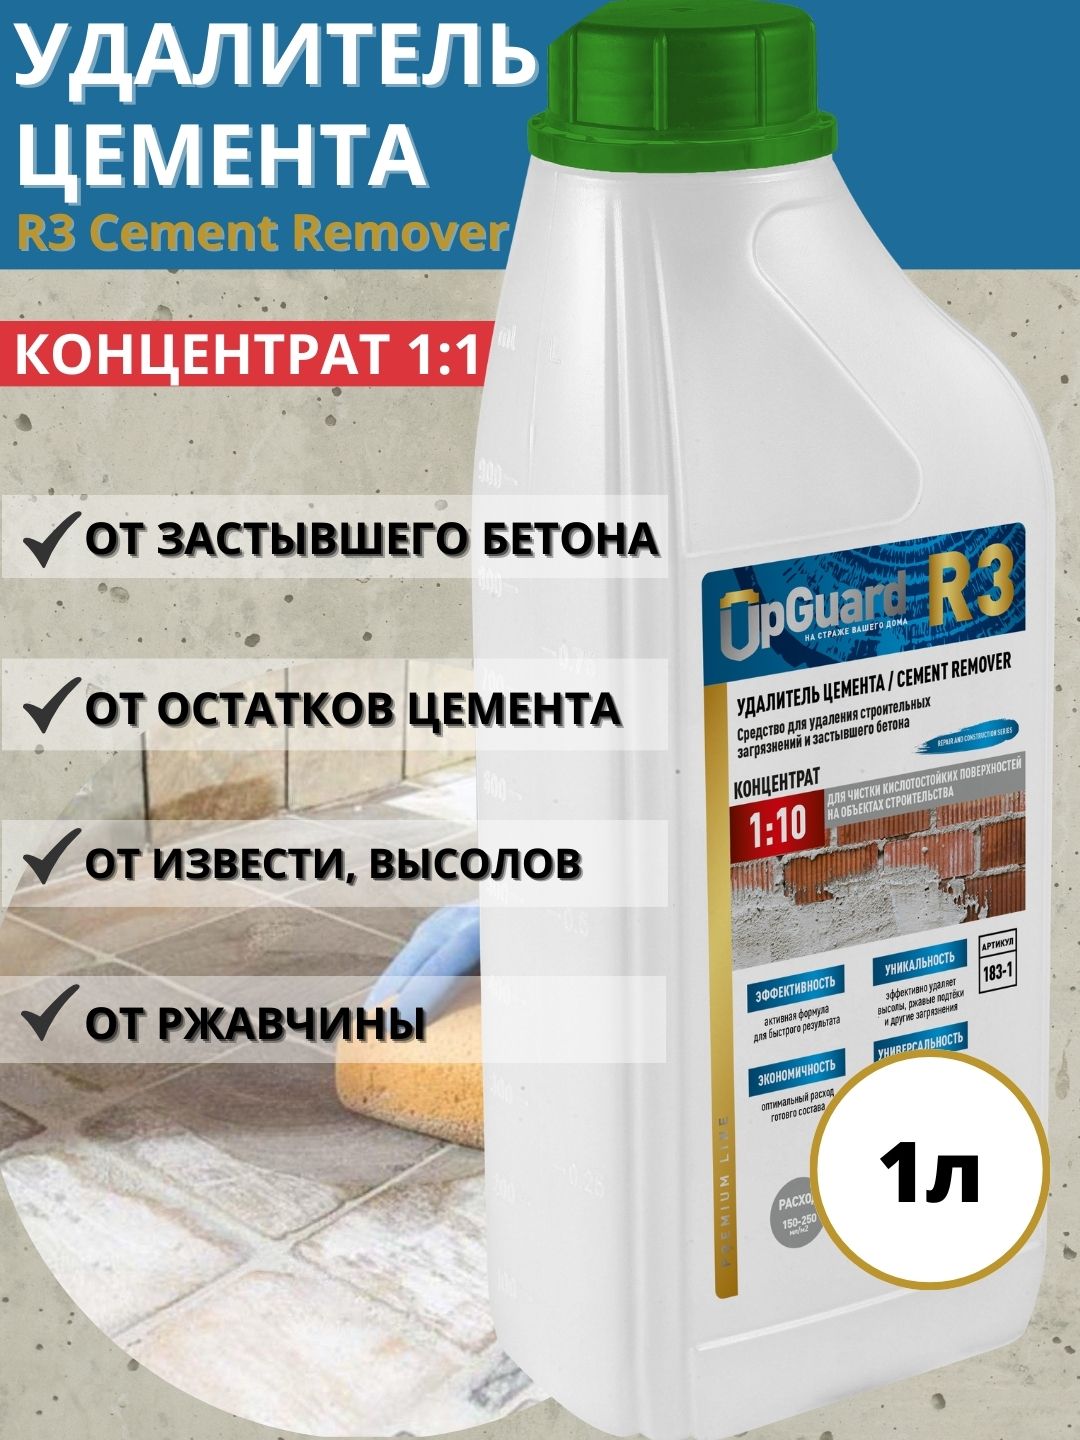 Удалитель цемента UpGUARD R3 Cement Remover концентрат 1:10, 1л удалитель цемента prosept